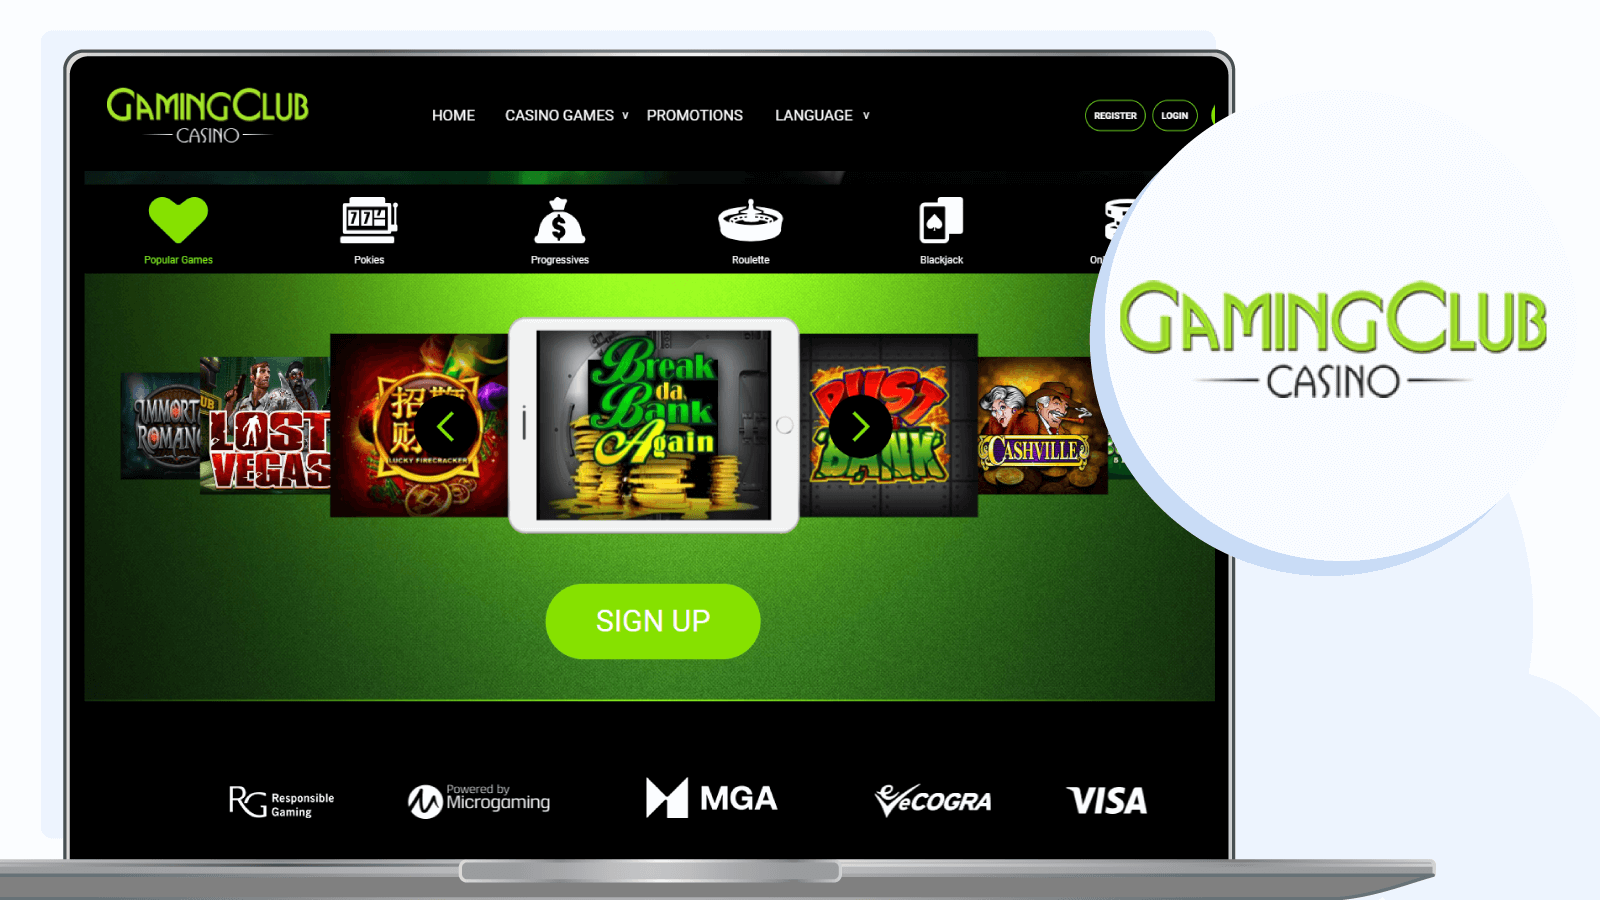 Gaming Club casino homepage